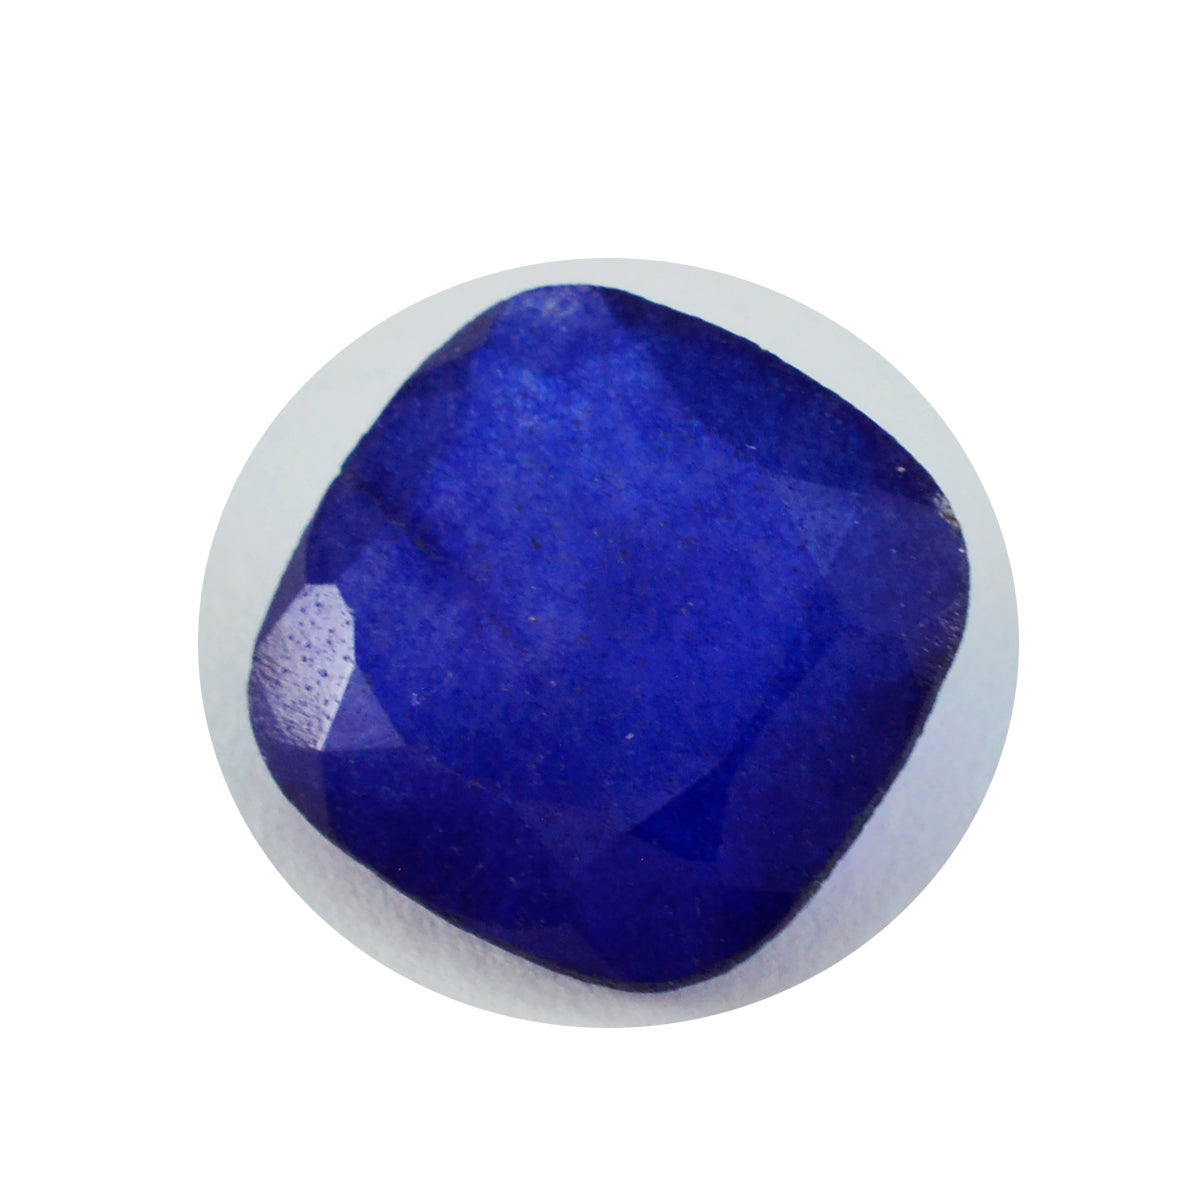 Riyogems 1PC echte blauwe jaspis gefacetteerd 14X14 mm kussenvorm mooie kwaliteitsedelsteen